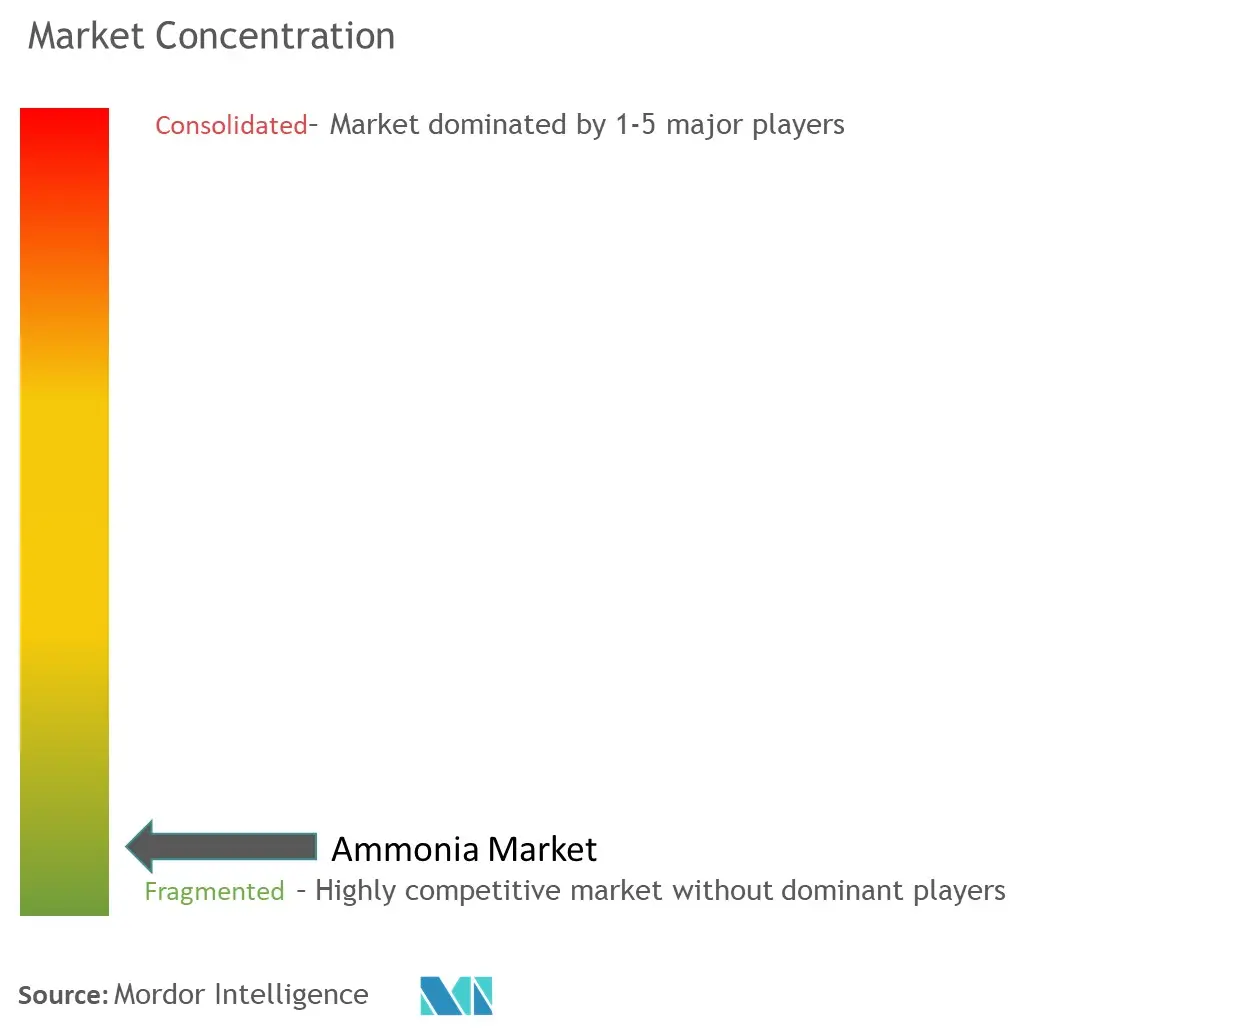 Ammonia Market Concentration